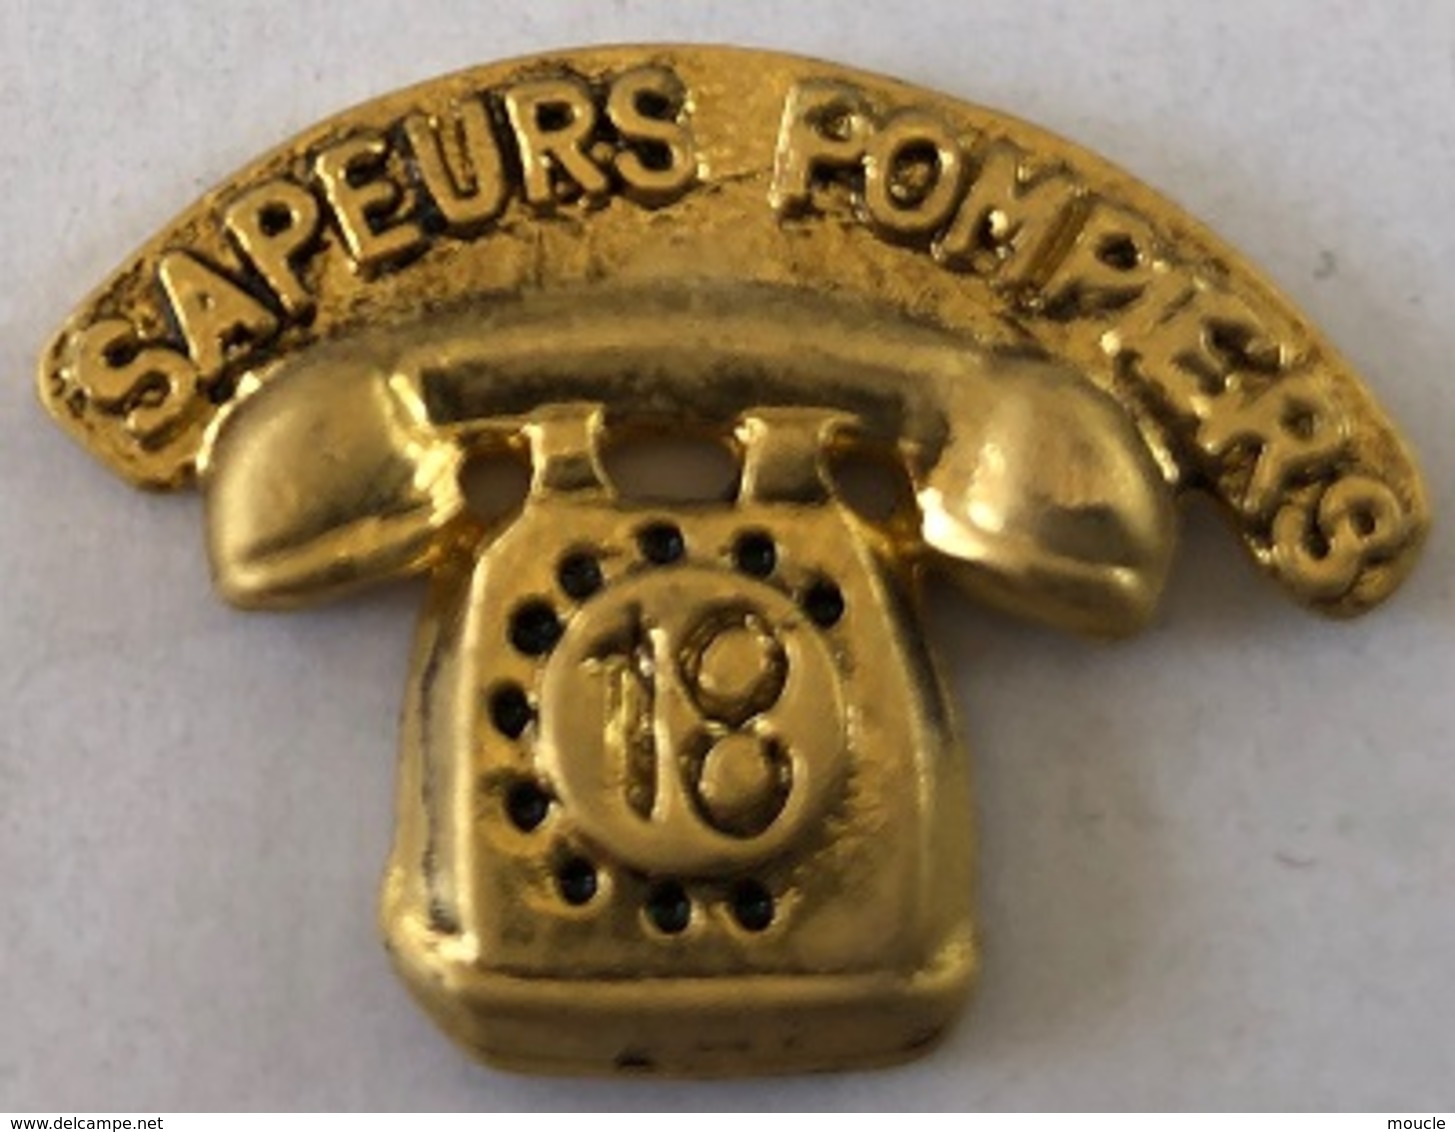 SAPEURS POMPIERS - TELEPHONE 18  - FRANCE - TELEFONO POMPIERE - PHONE  FIREFIGHTER - TELEFON FEUERWEHRMANN - (25) - Pompiers